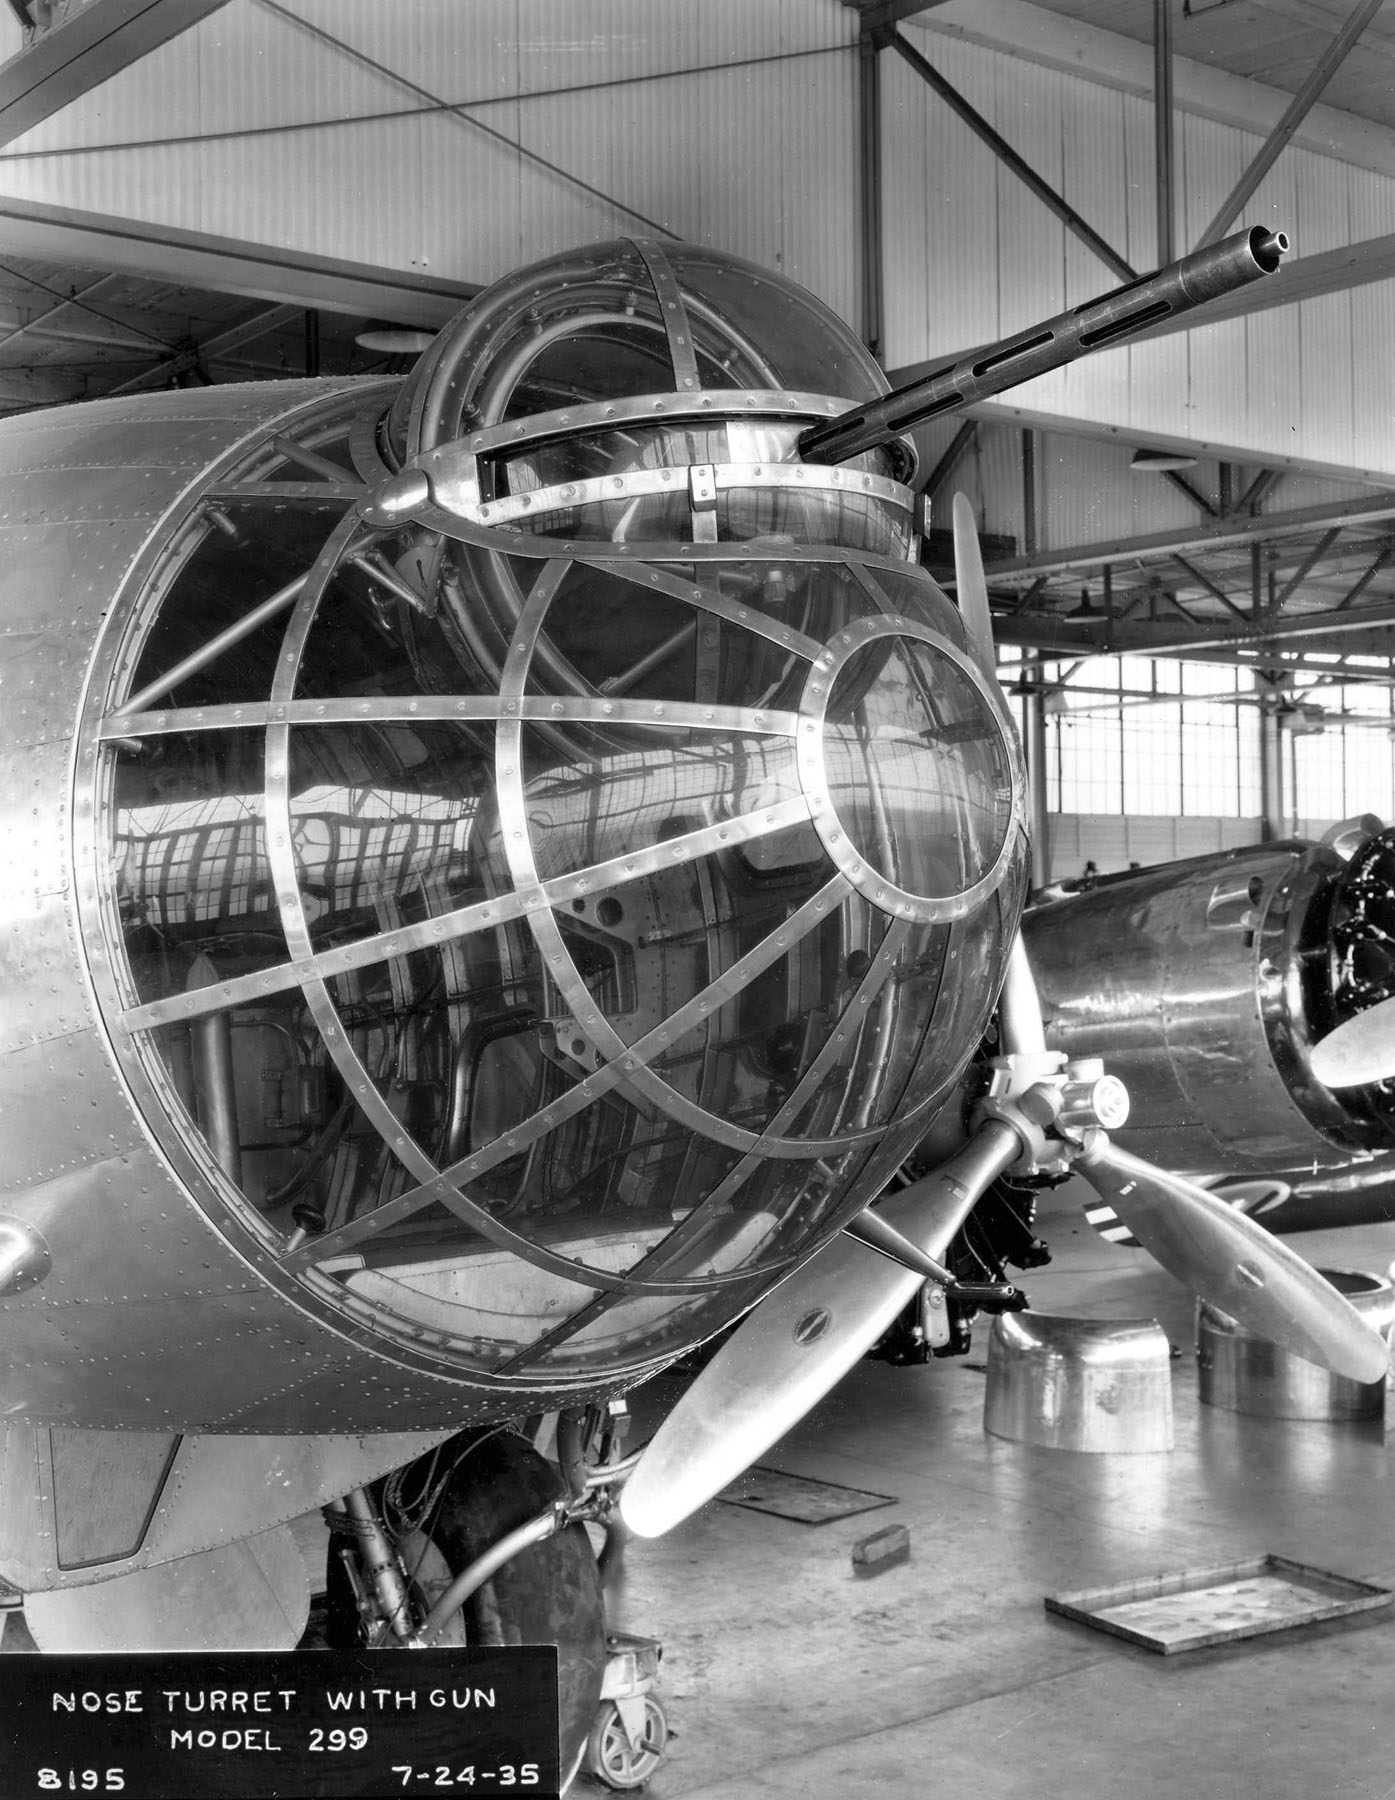 File:Boeing XB-17 (Model 299) nose turret with gun.jpg - Wikipedia